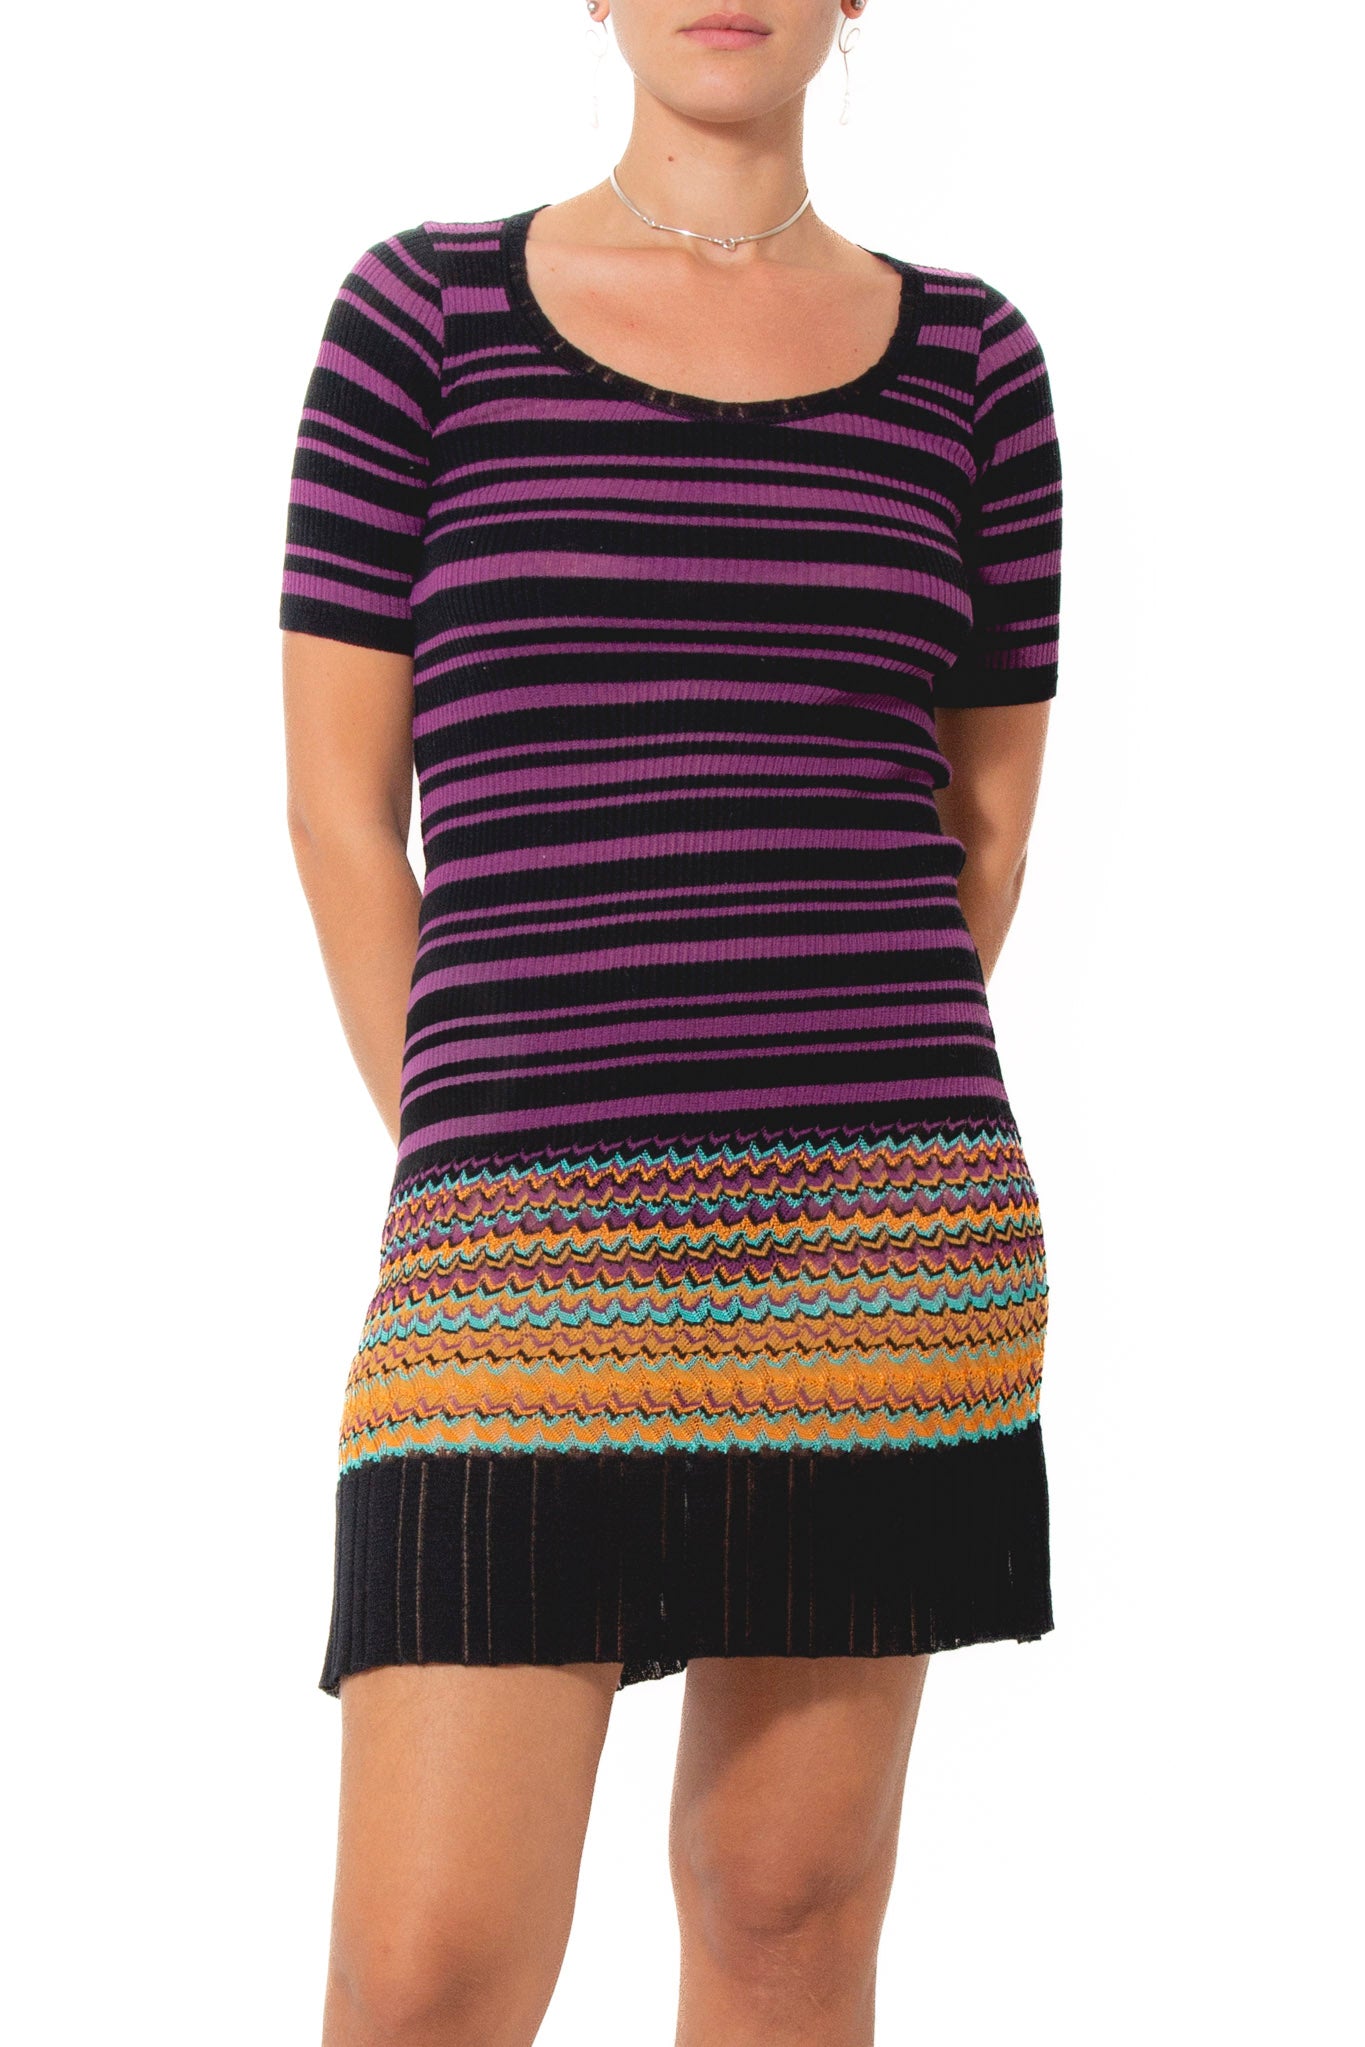 Missoni Knitted Chevron Dress